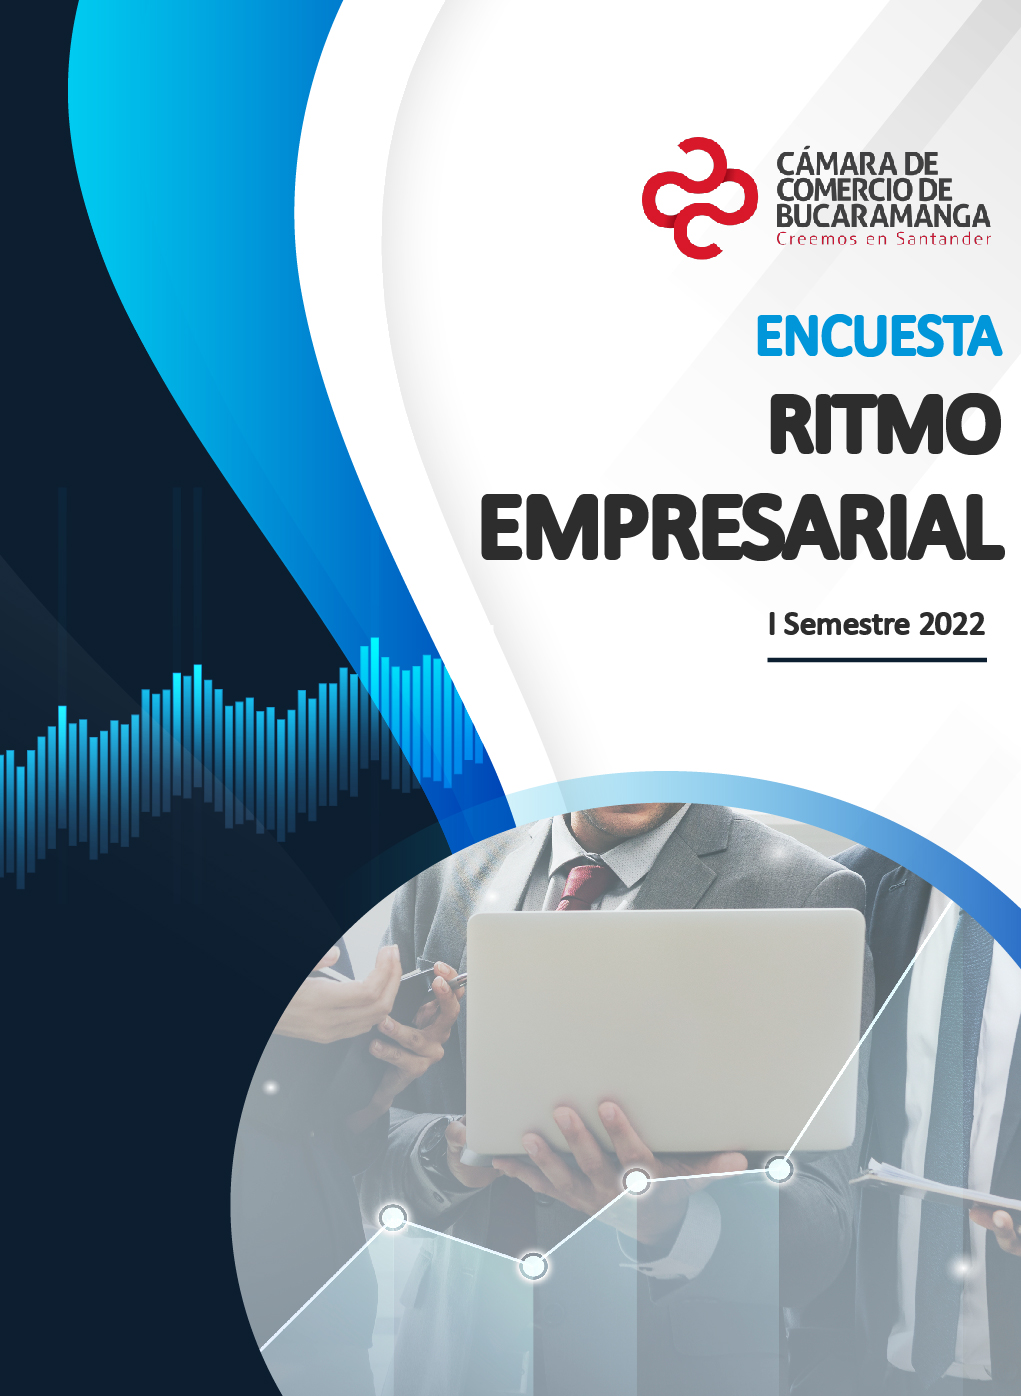 Encuesta Ritmo Empresarial Santander 2022 - I semestre